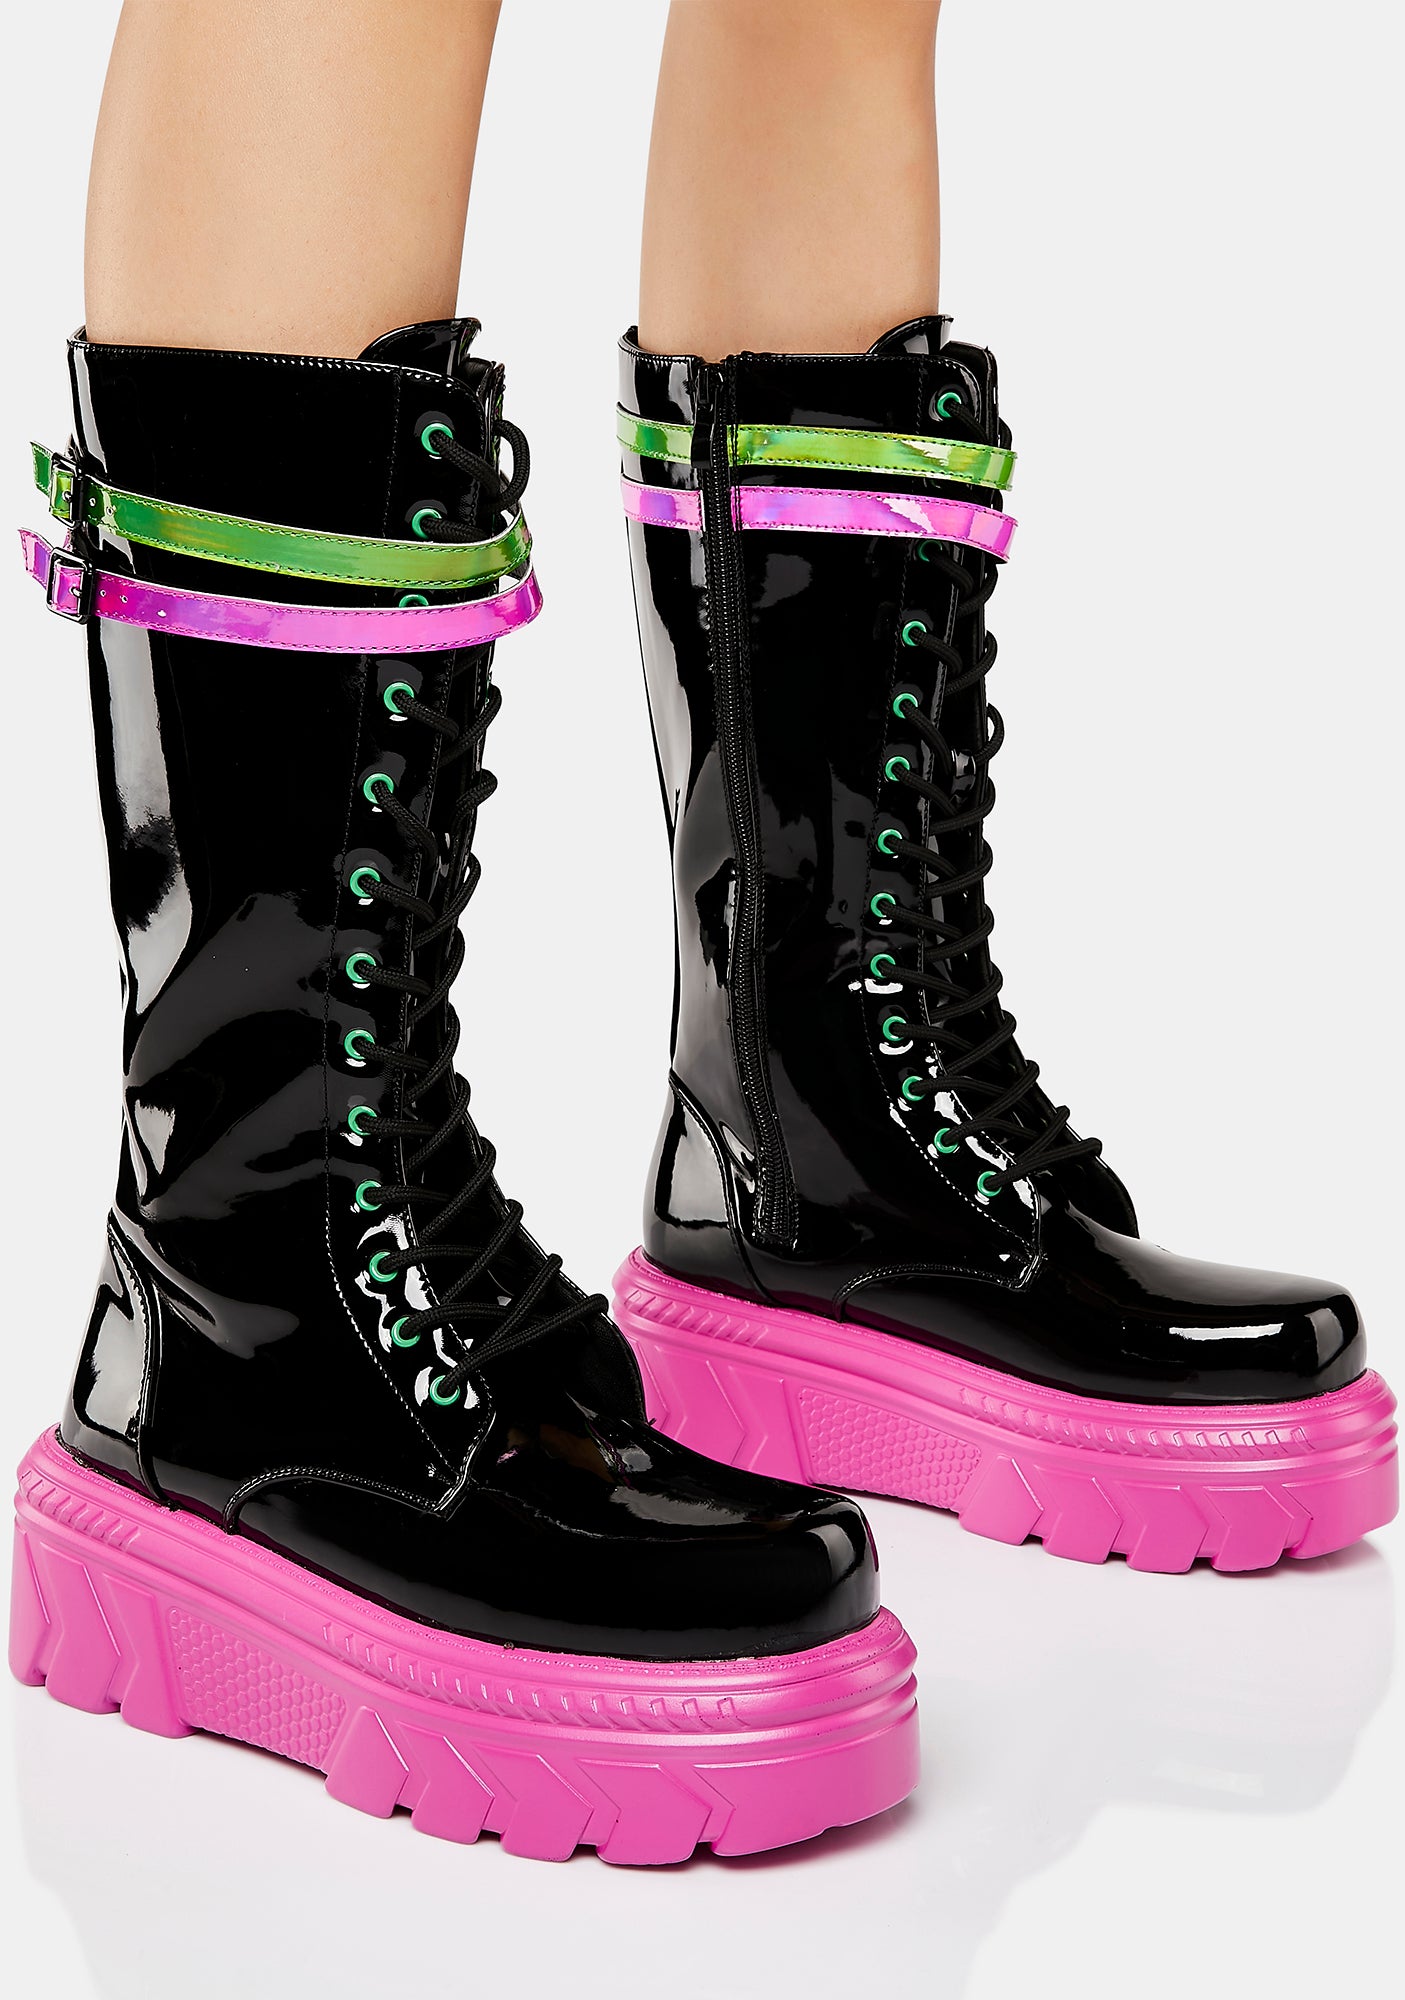 Koi Footwear Neon Detail Calf High Combat Boots - Black/Pink